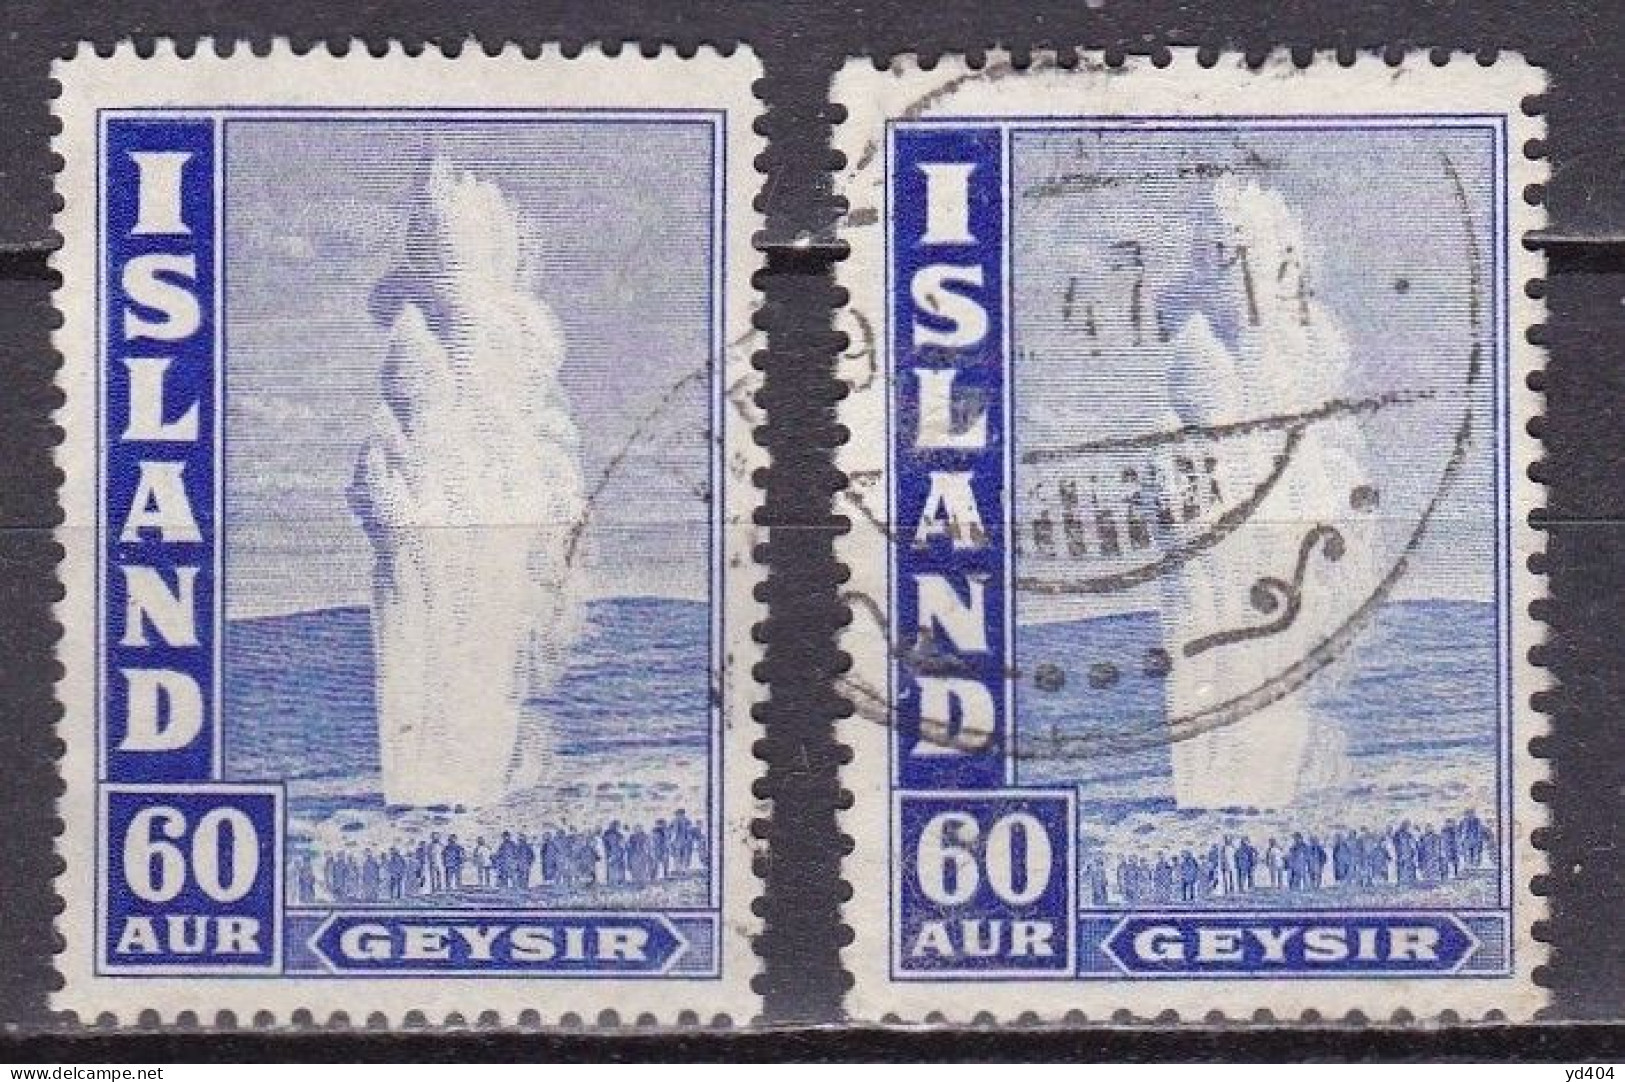 IS036C – ISLANDE – ICELAND – 1943-47 – THE GREAT GEYSER – SC # 208A/Ac USED 12 € - Oblitérés